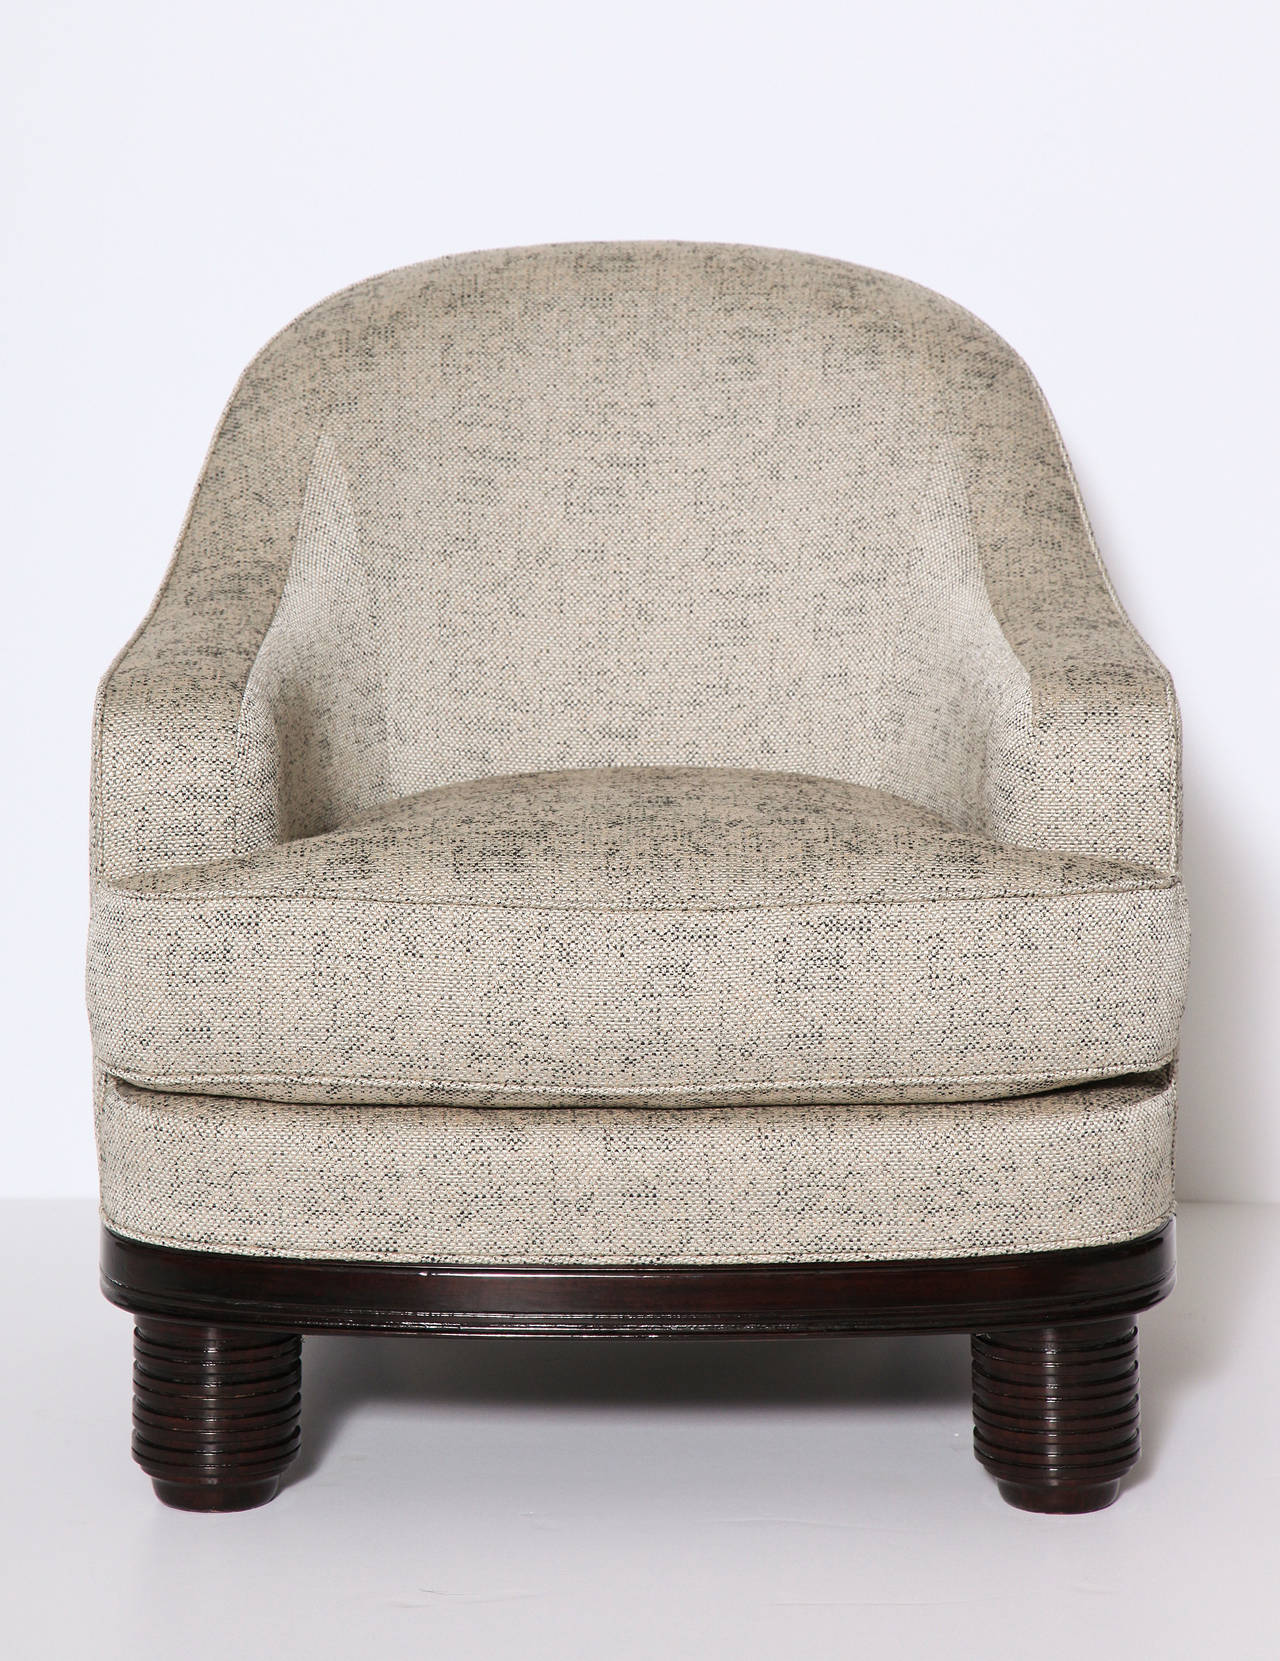 Pair of ebonized fruitwood armchairs by Paul Follot

For an illustration of a chair by Follot with very similar legs, see Que´nioux, Gaston. Les arts de´coratifs modernes - France. Paris: Larousse, 1925. 161.